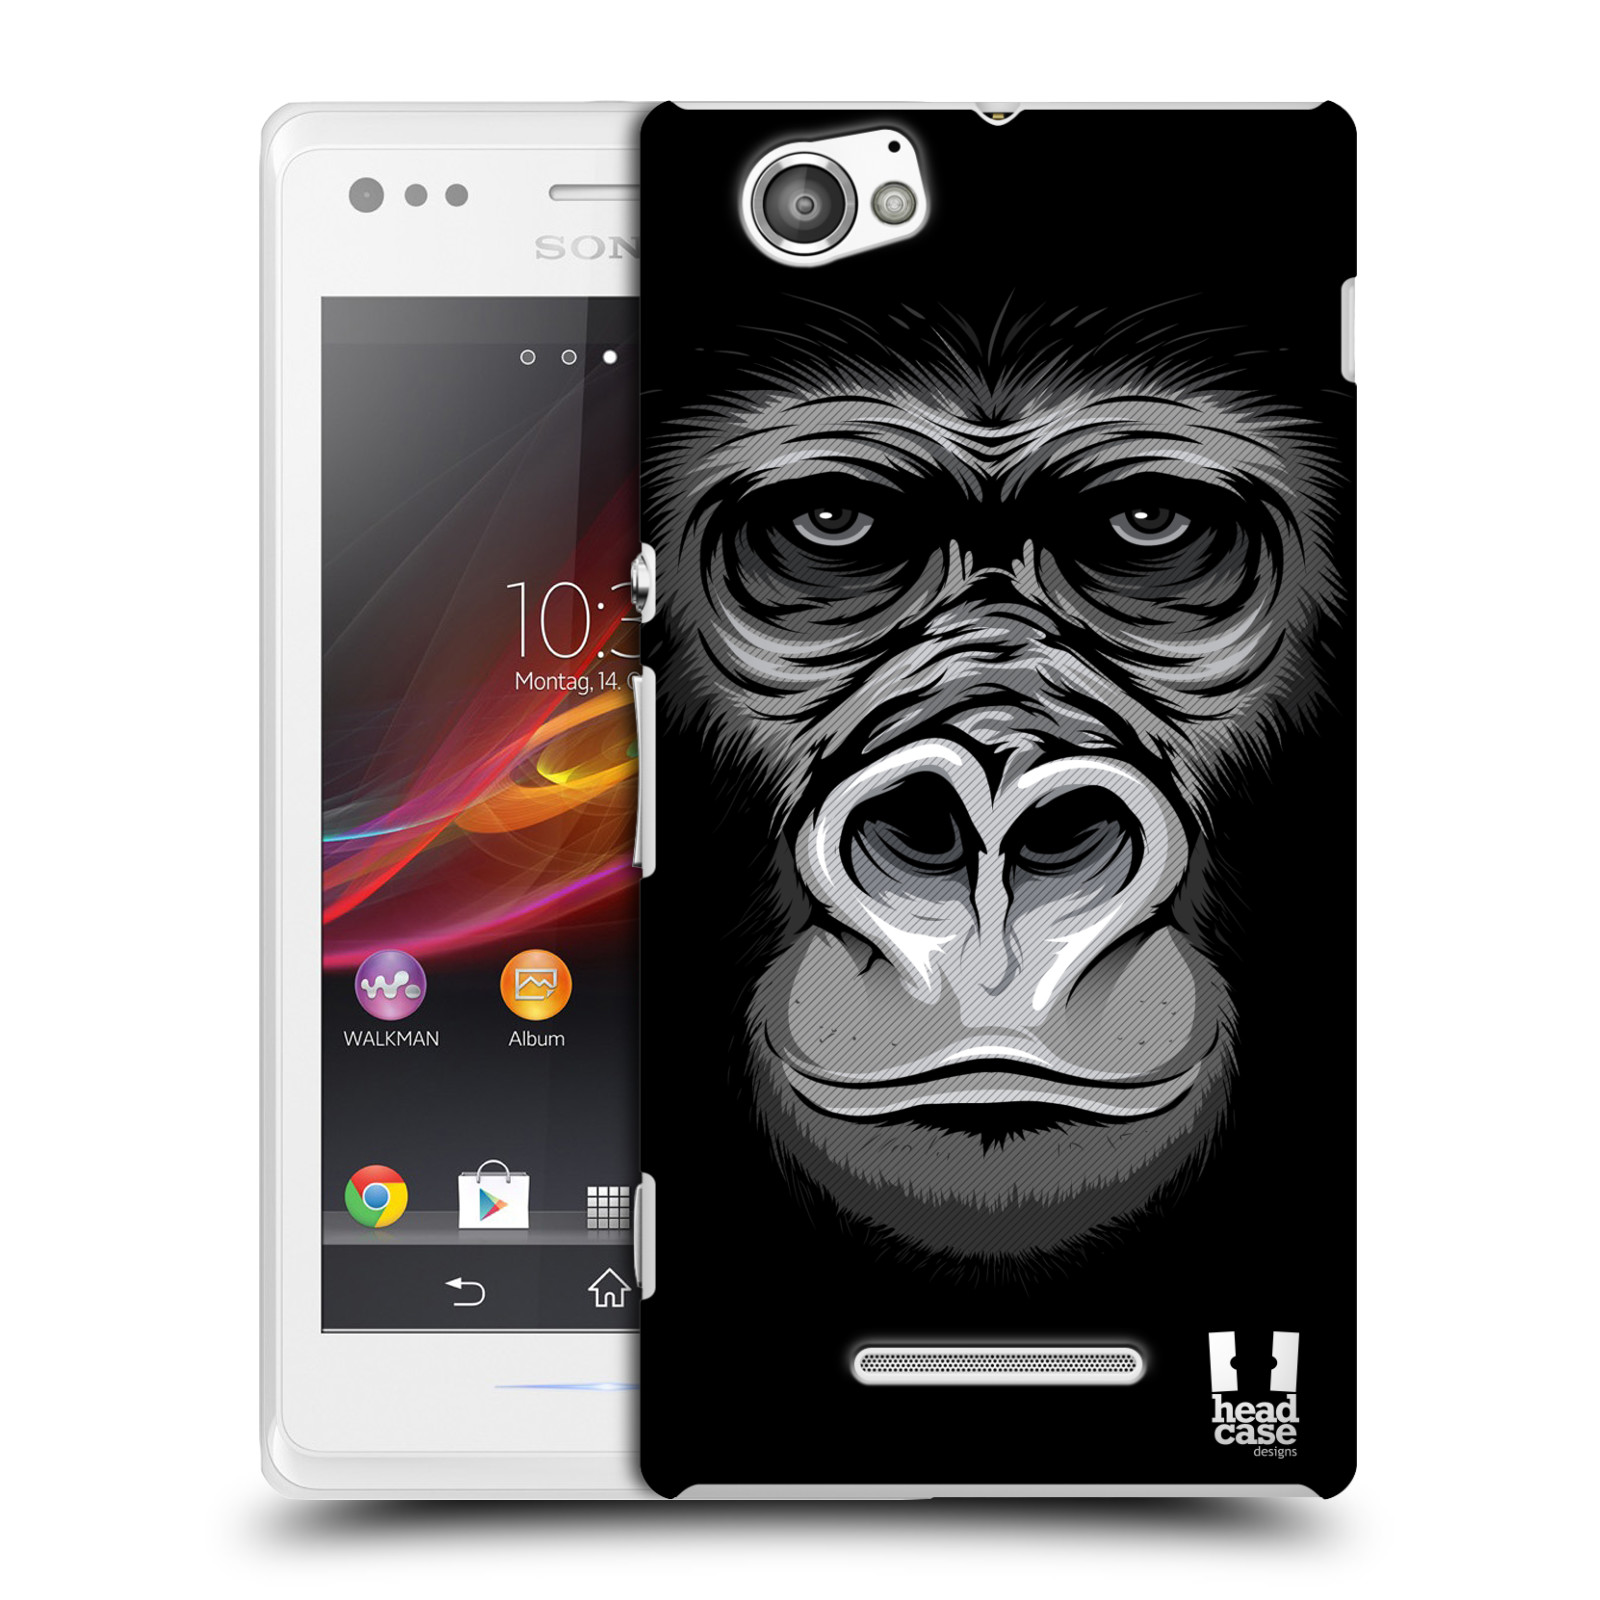 HEAD CASE plastový obal na mobil Sony Xperia M vzor Zvíře kreslená tvář 2 gorila